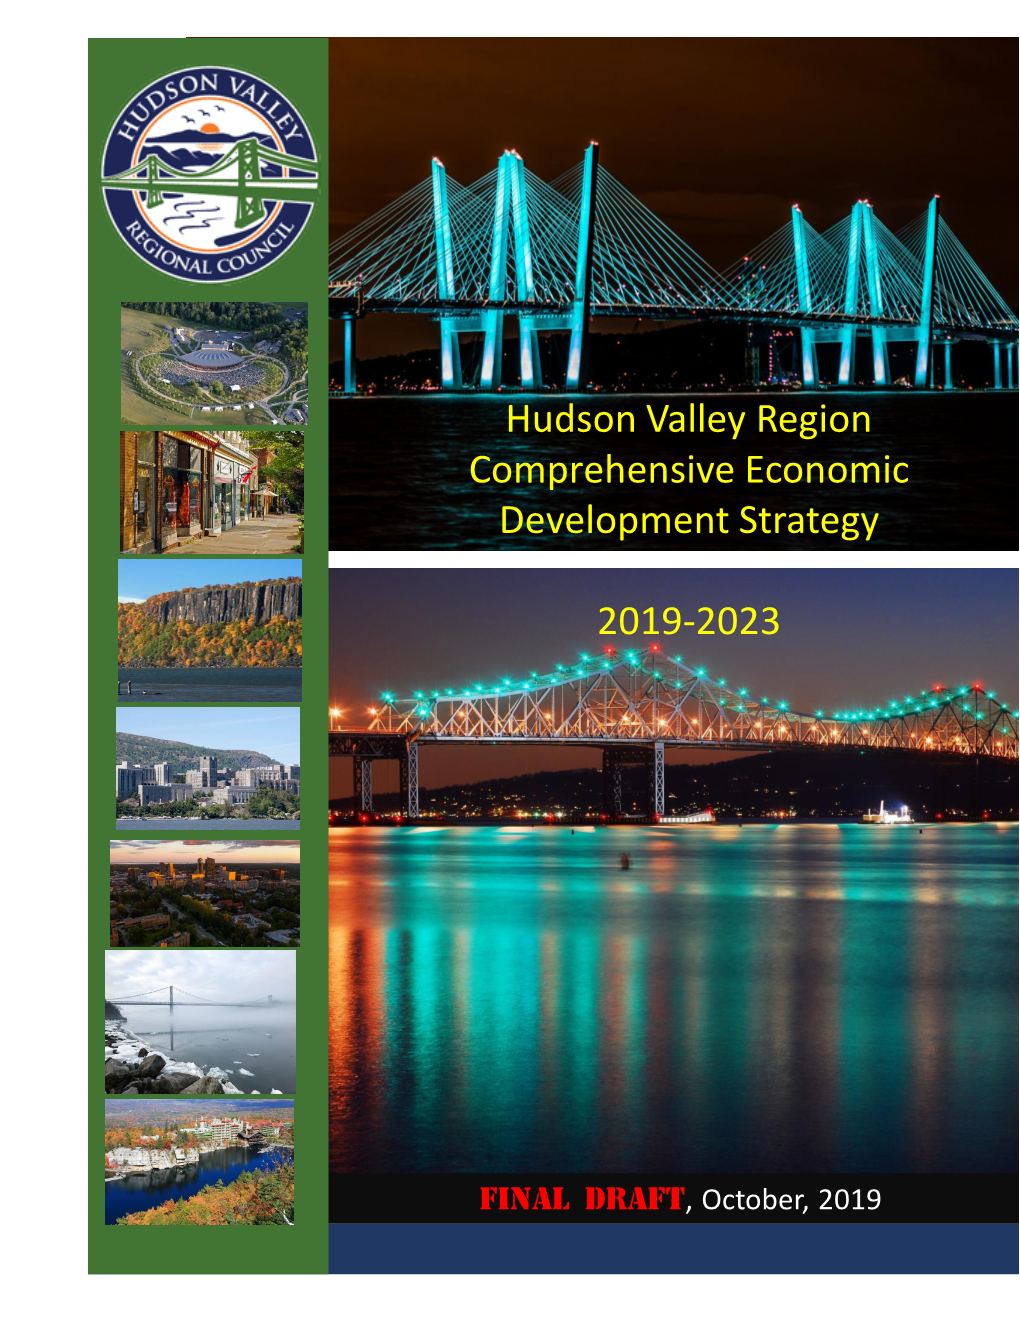 Hudson Valley Region Comprehensive Economic Development Strategy 2019-2023